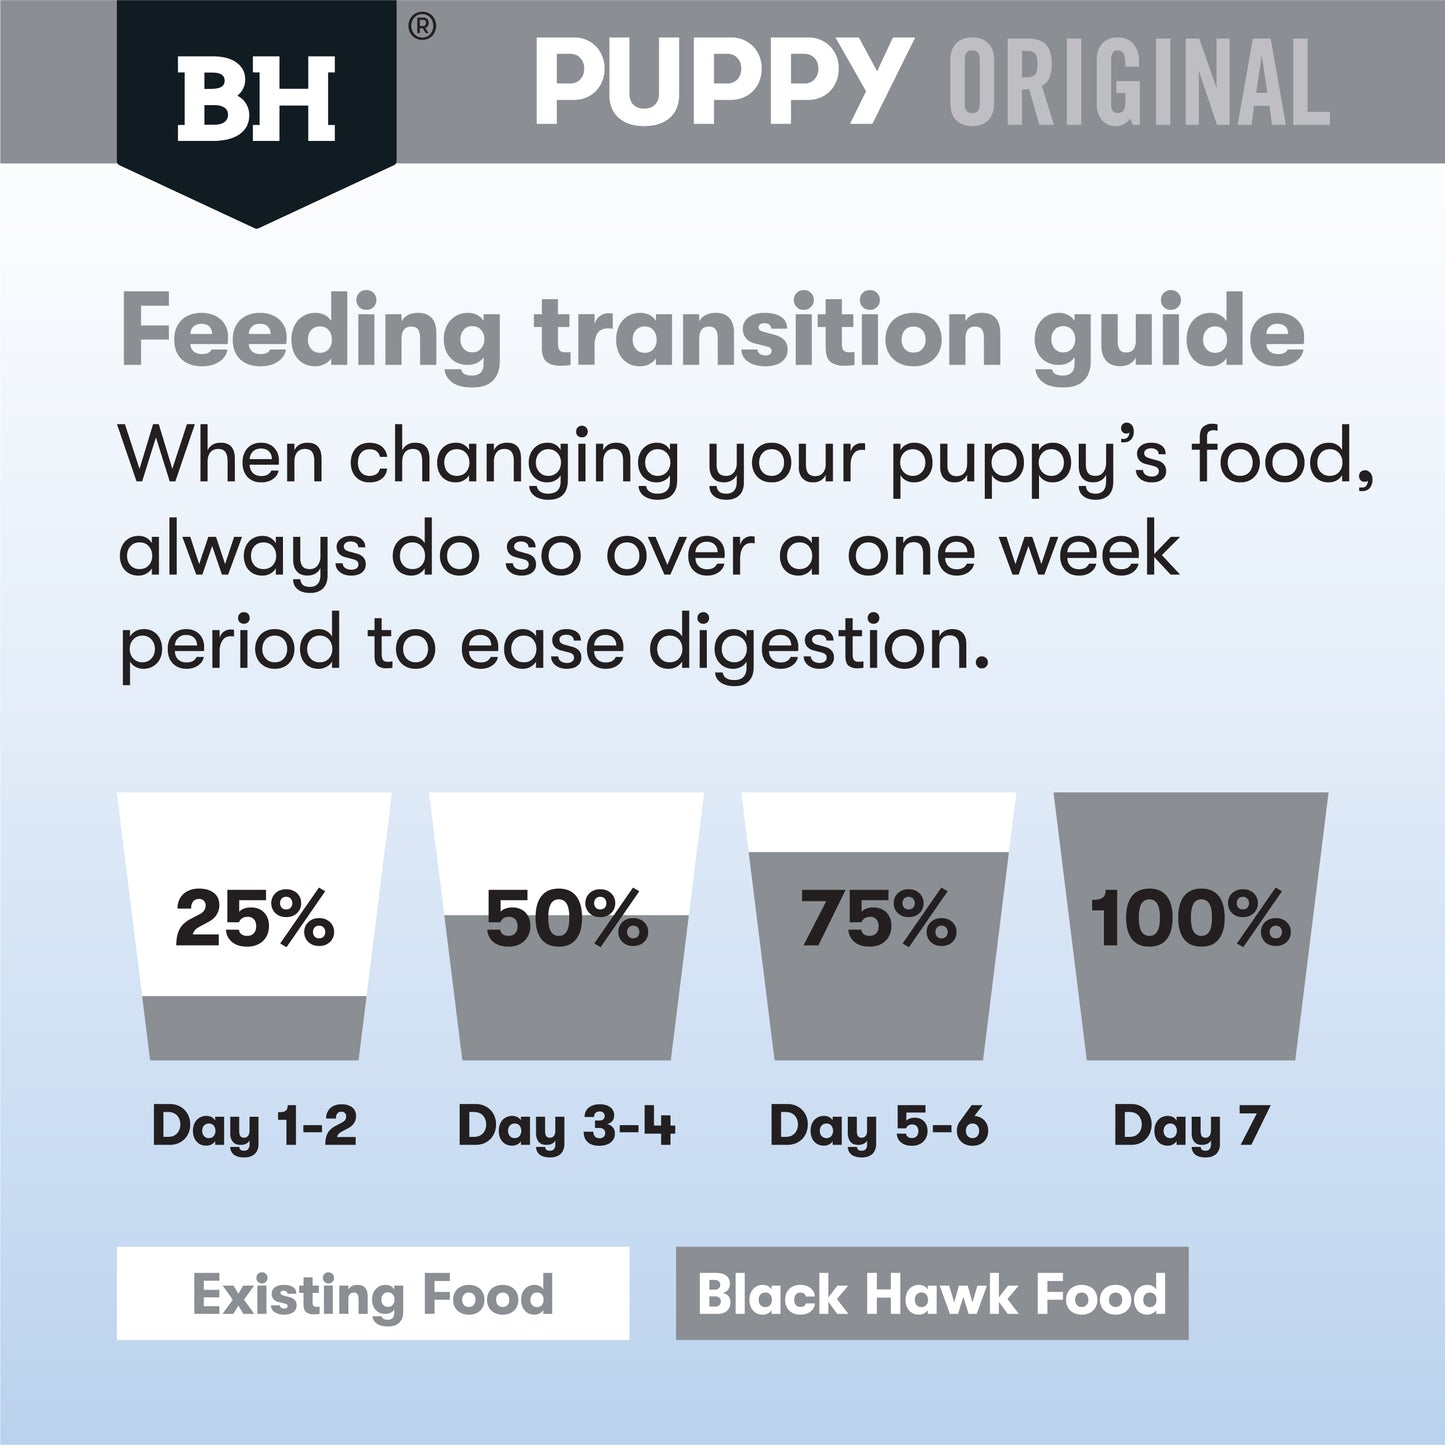 Black Hawk Puppy Large Breed Lamb & Rice Dry Dog food